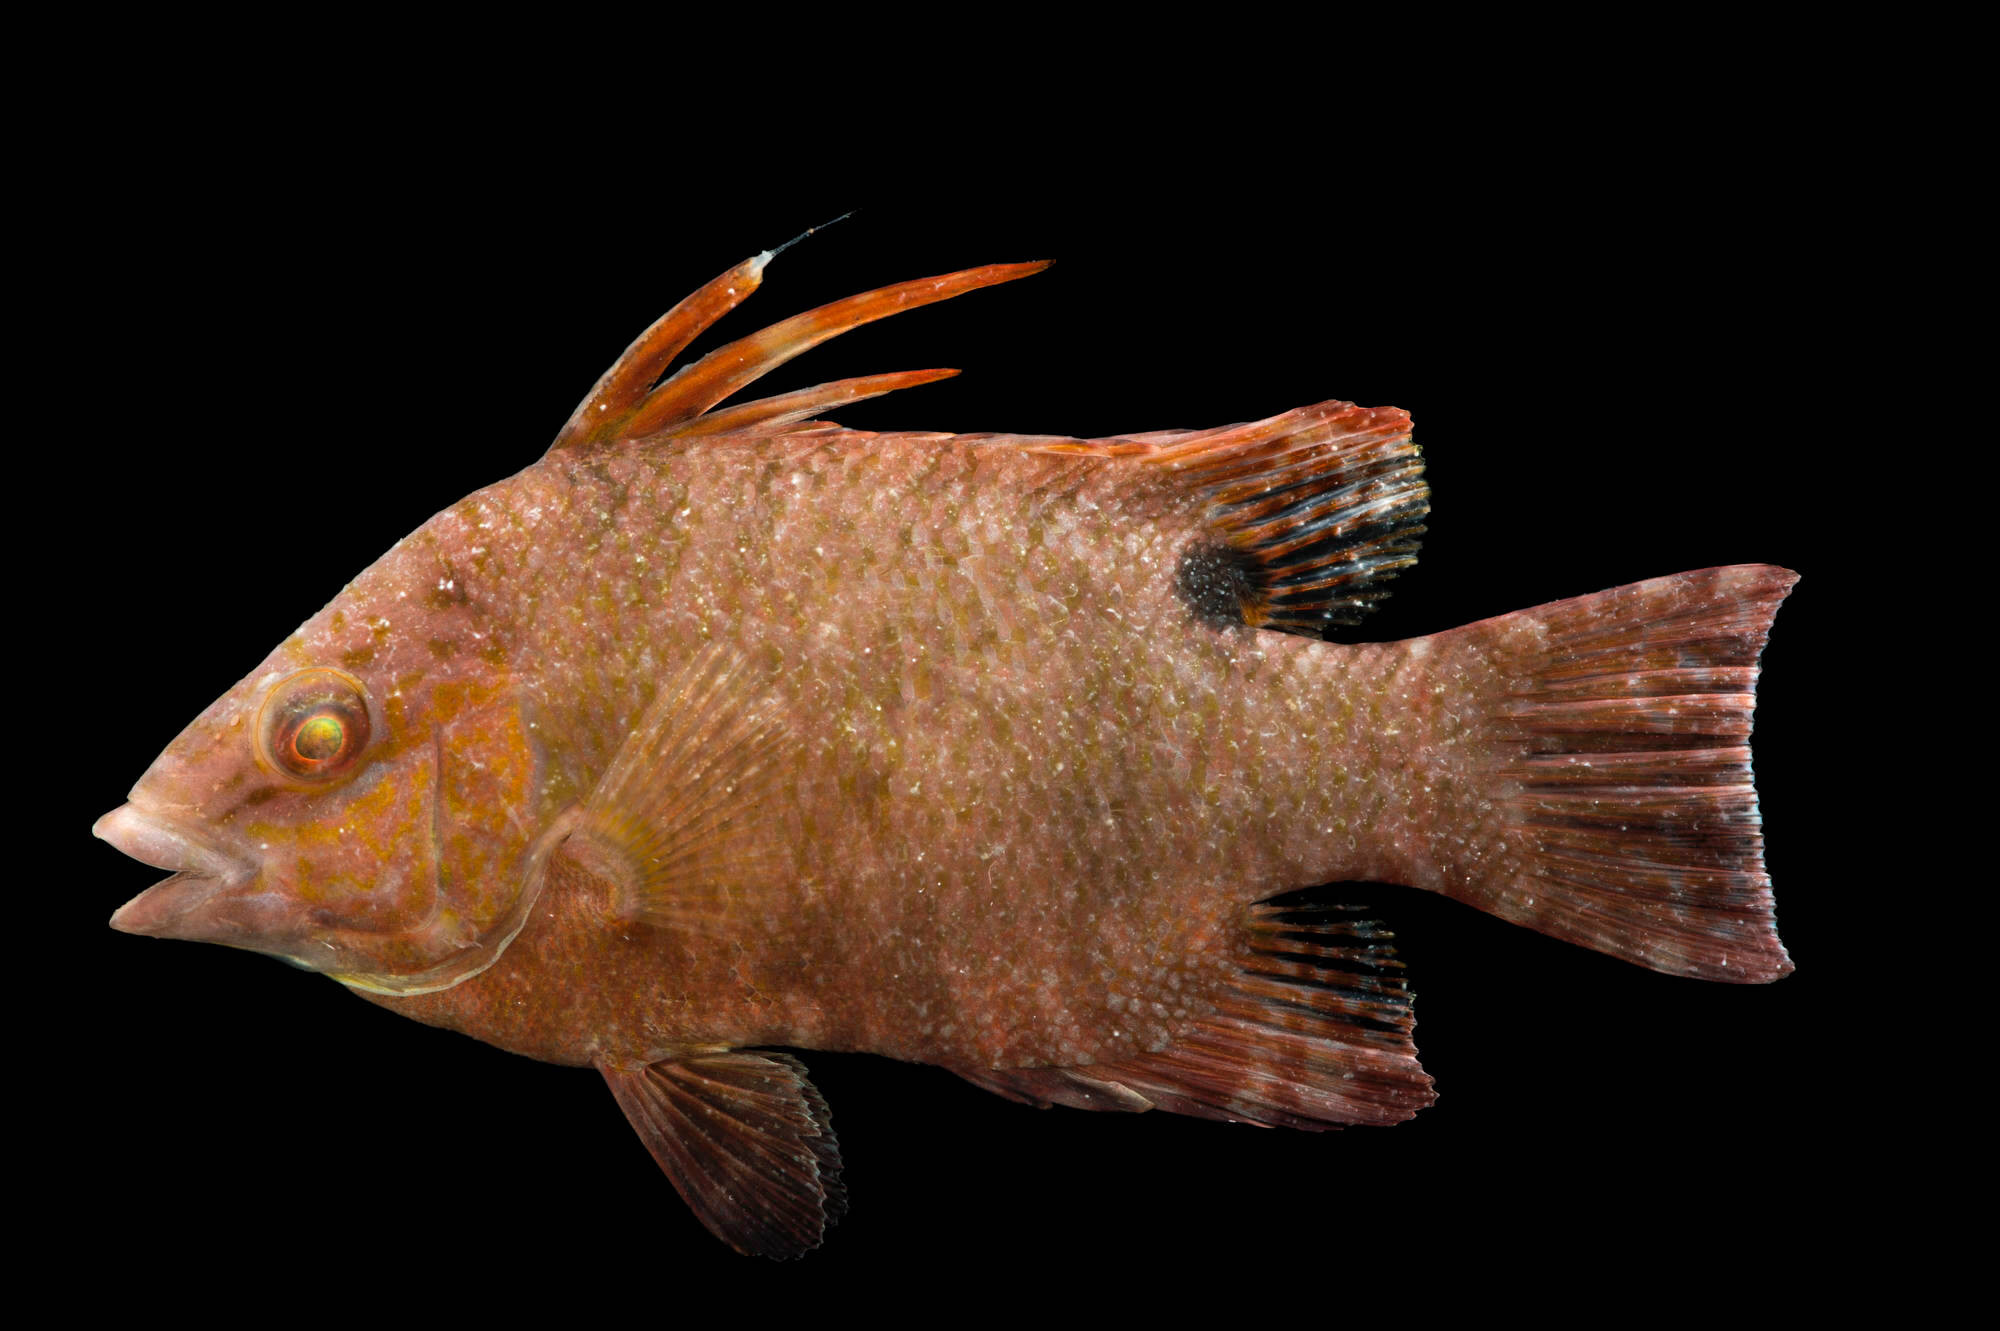 A juvenile hogfish (Lachnolaimus maximus) at Gulf Specimen Marine Lab.